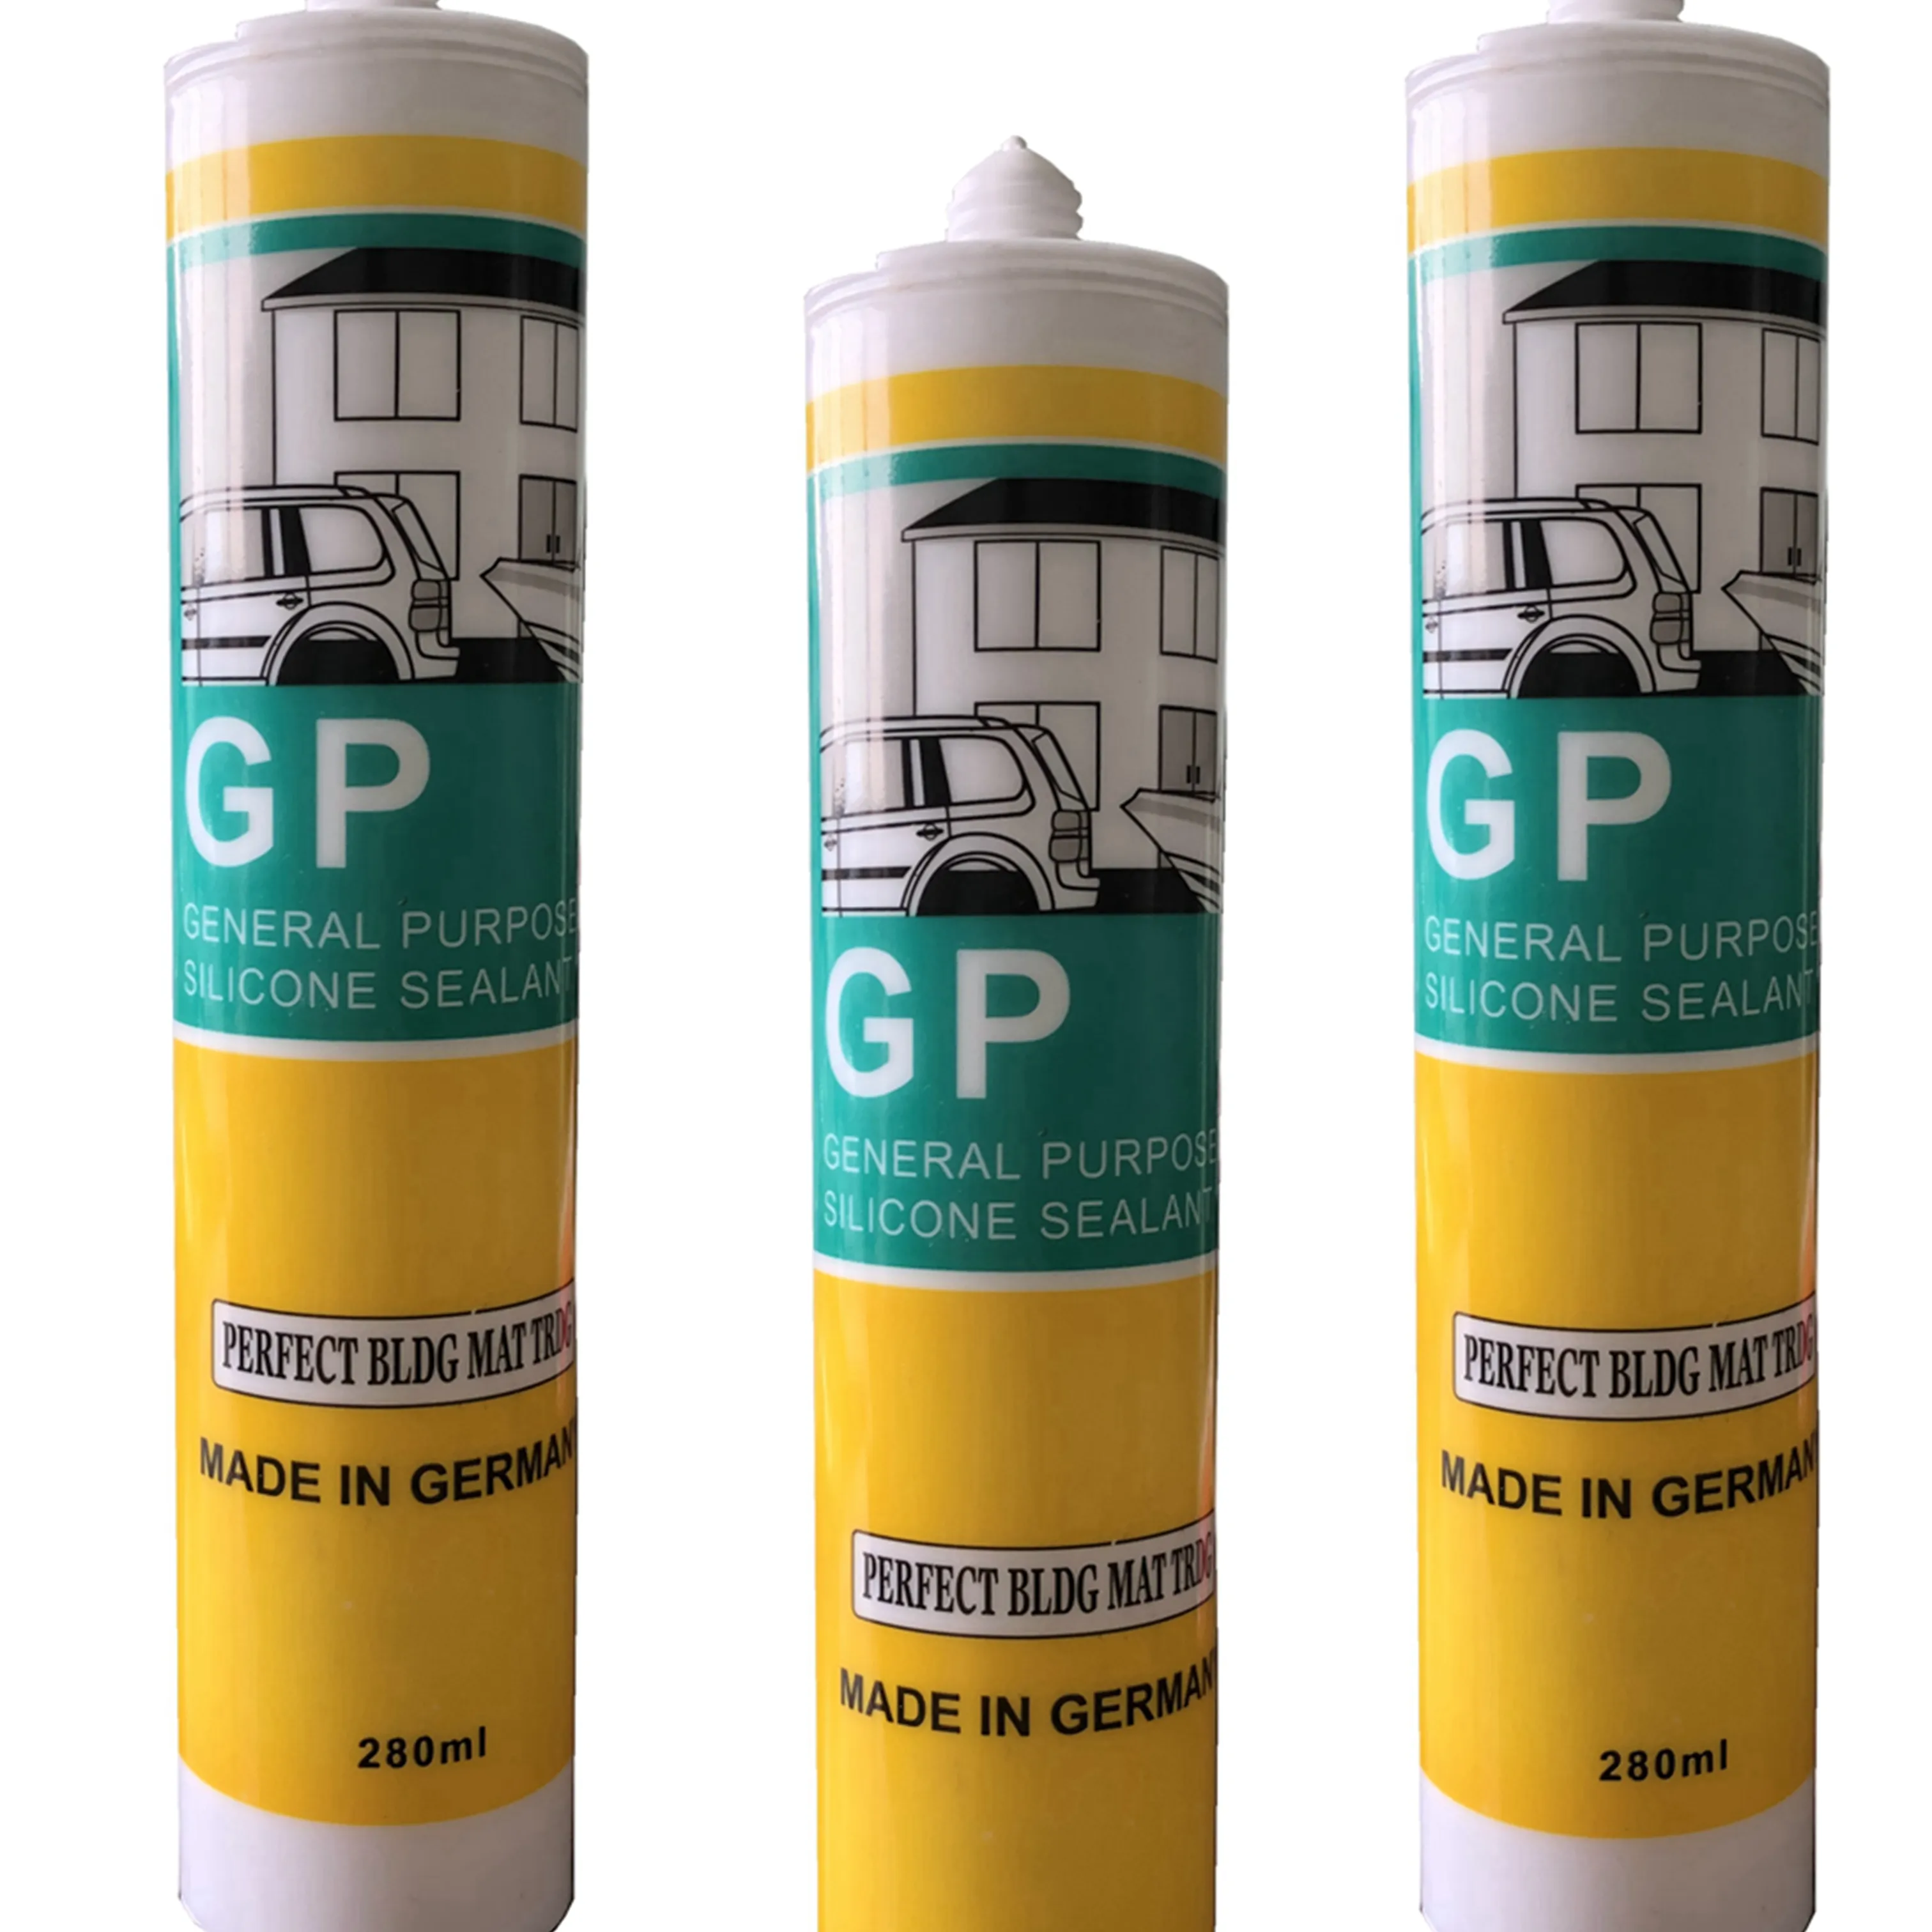 General Purpose GP Silicone Sealant Adhesive